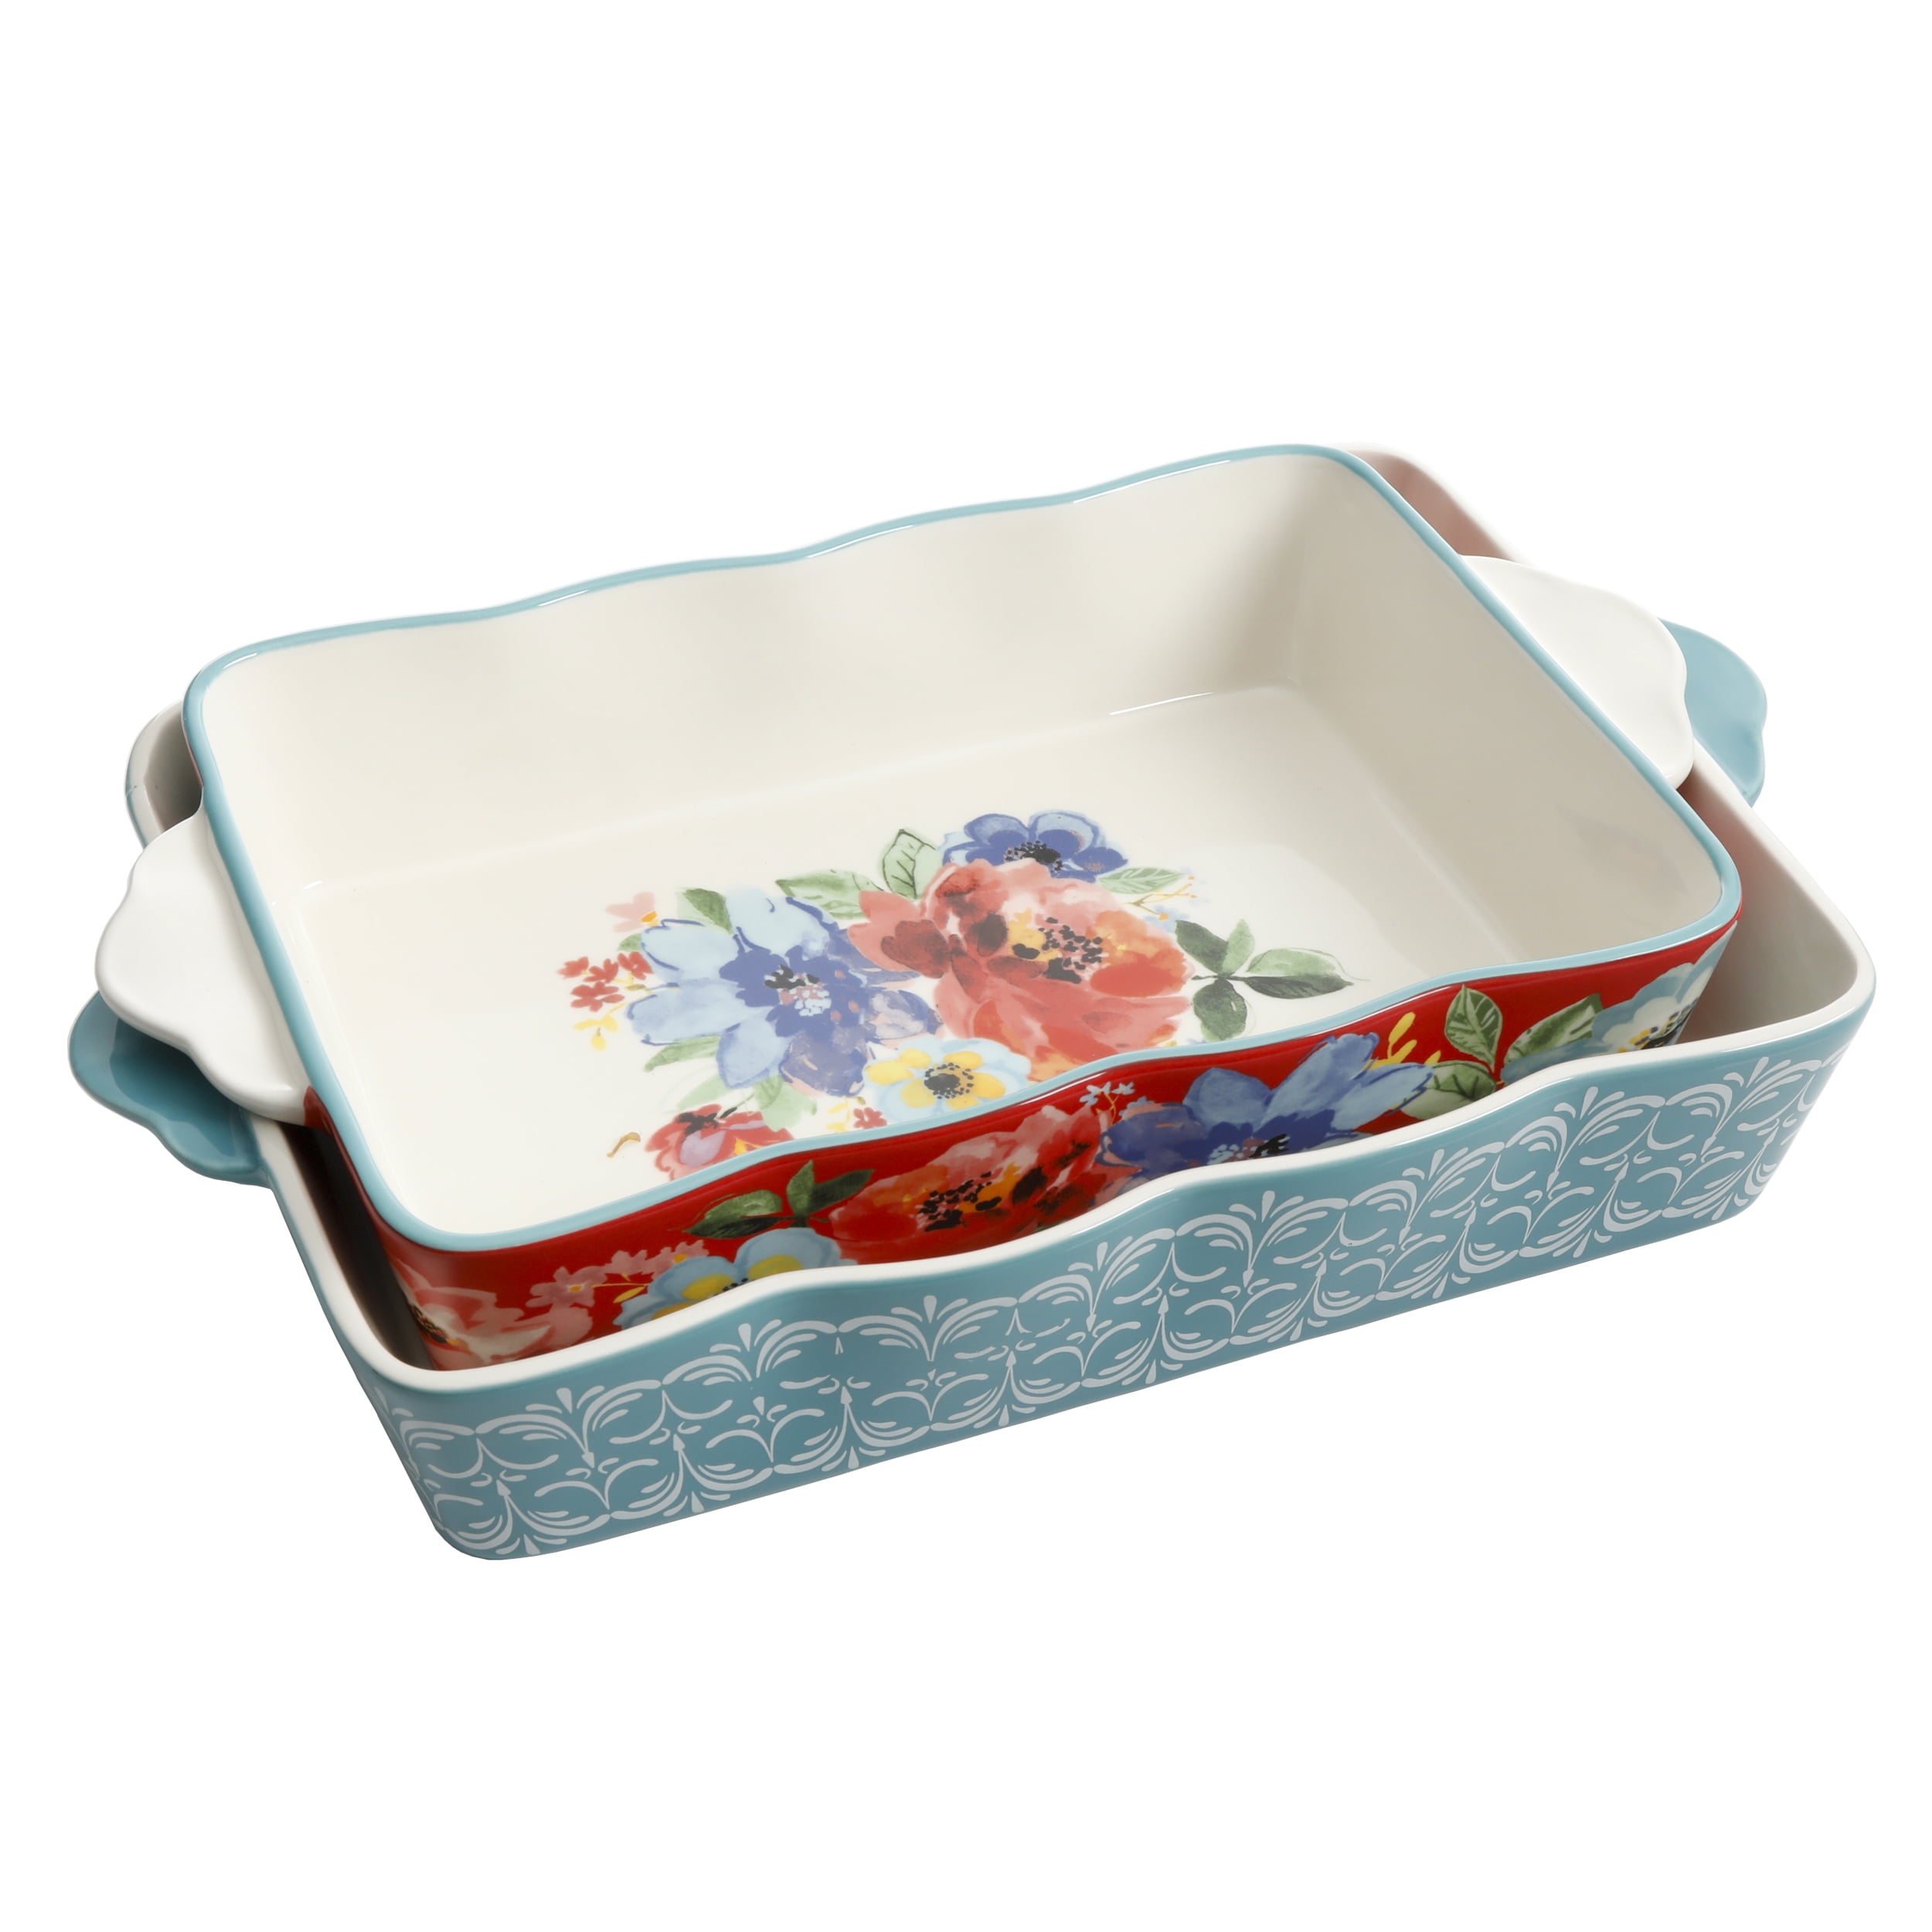 The Pioneer Woman Cheerful Rose 2-Piece Rectangular Ceramic Holiday  Bakeware Set